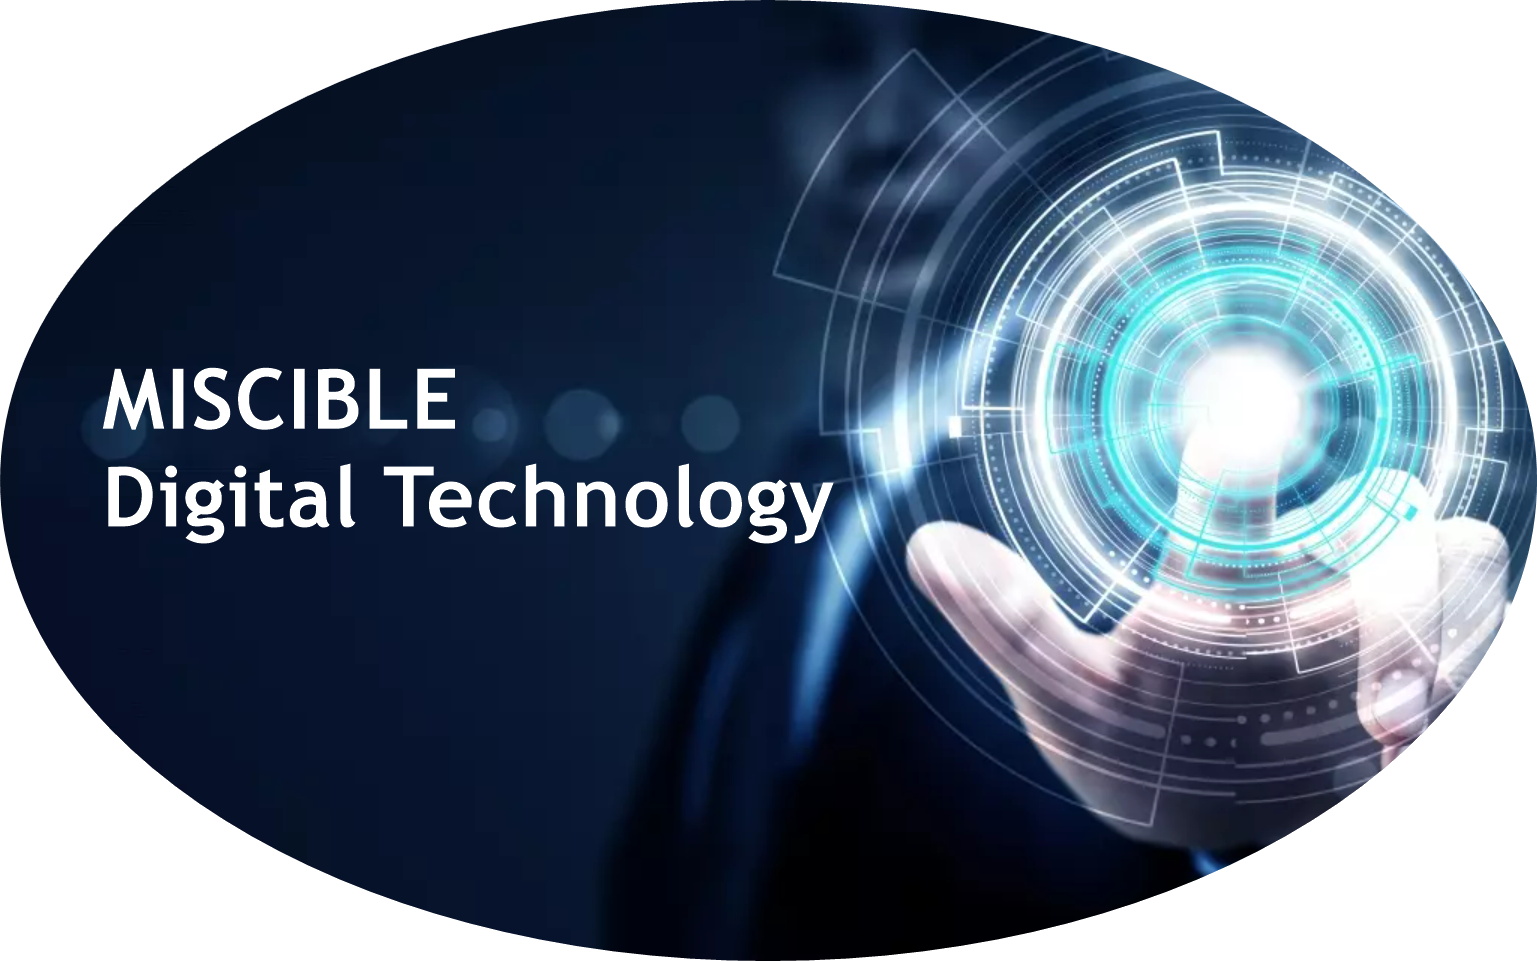 MISCIBLE Digital Technology